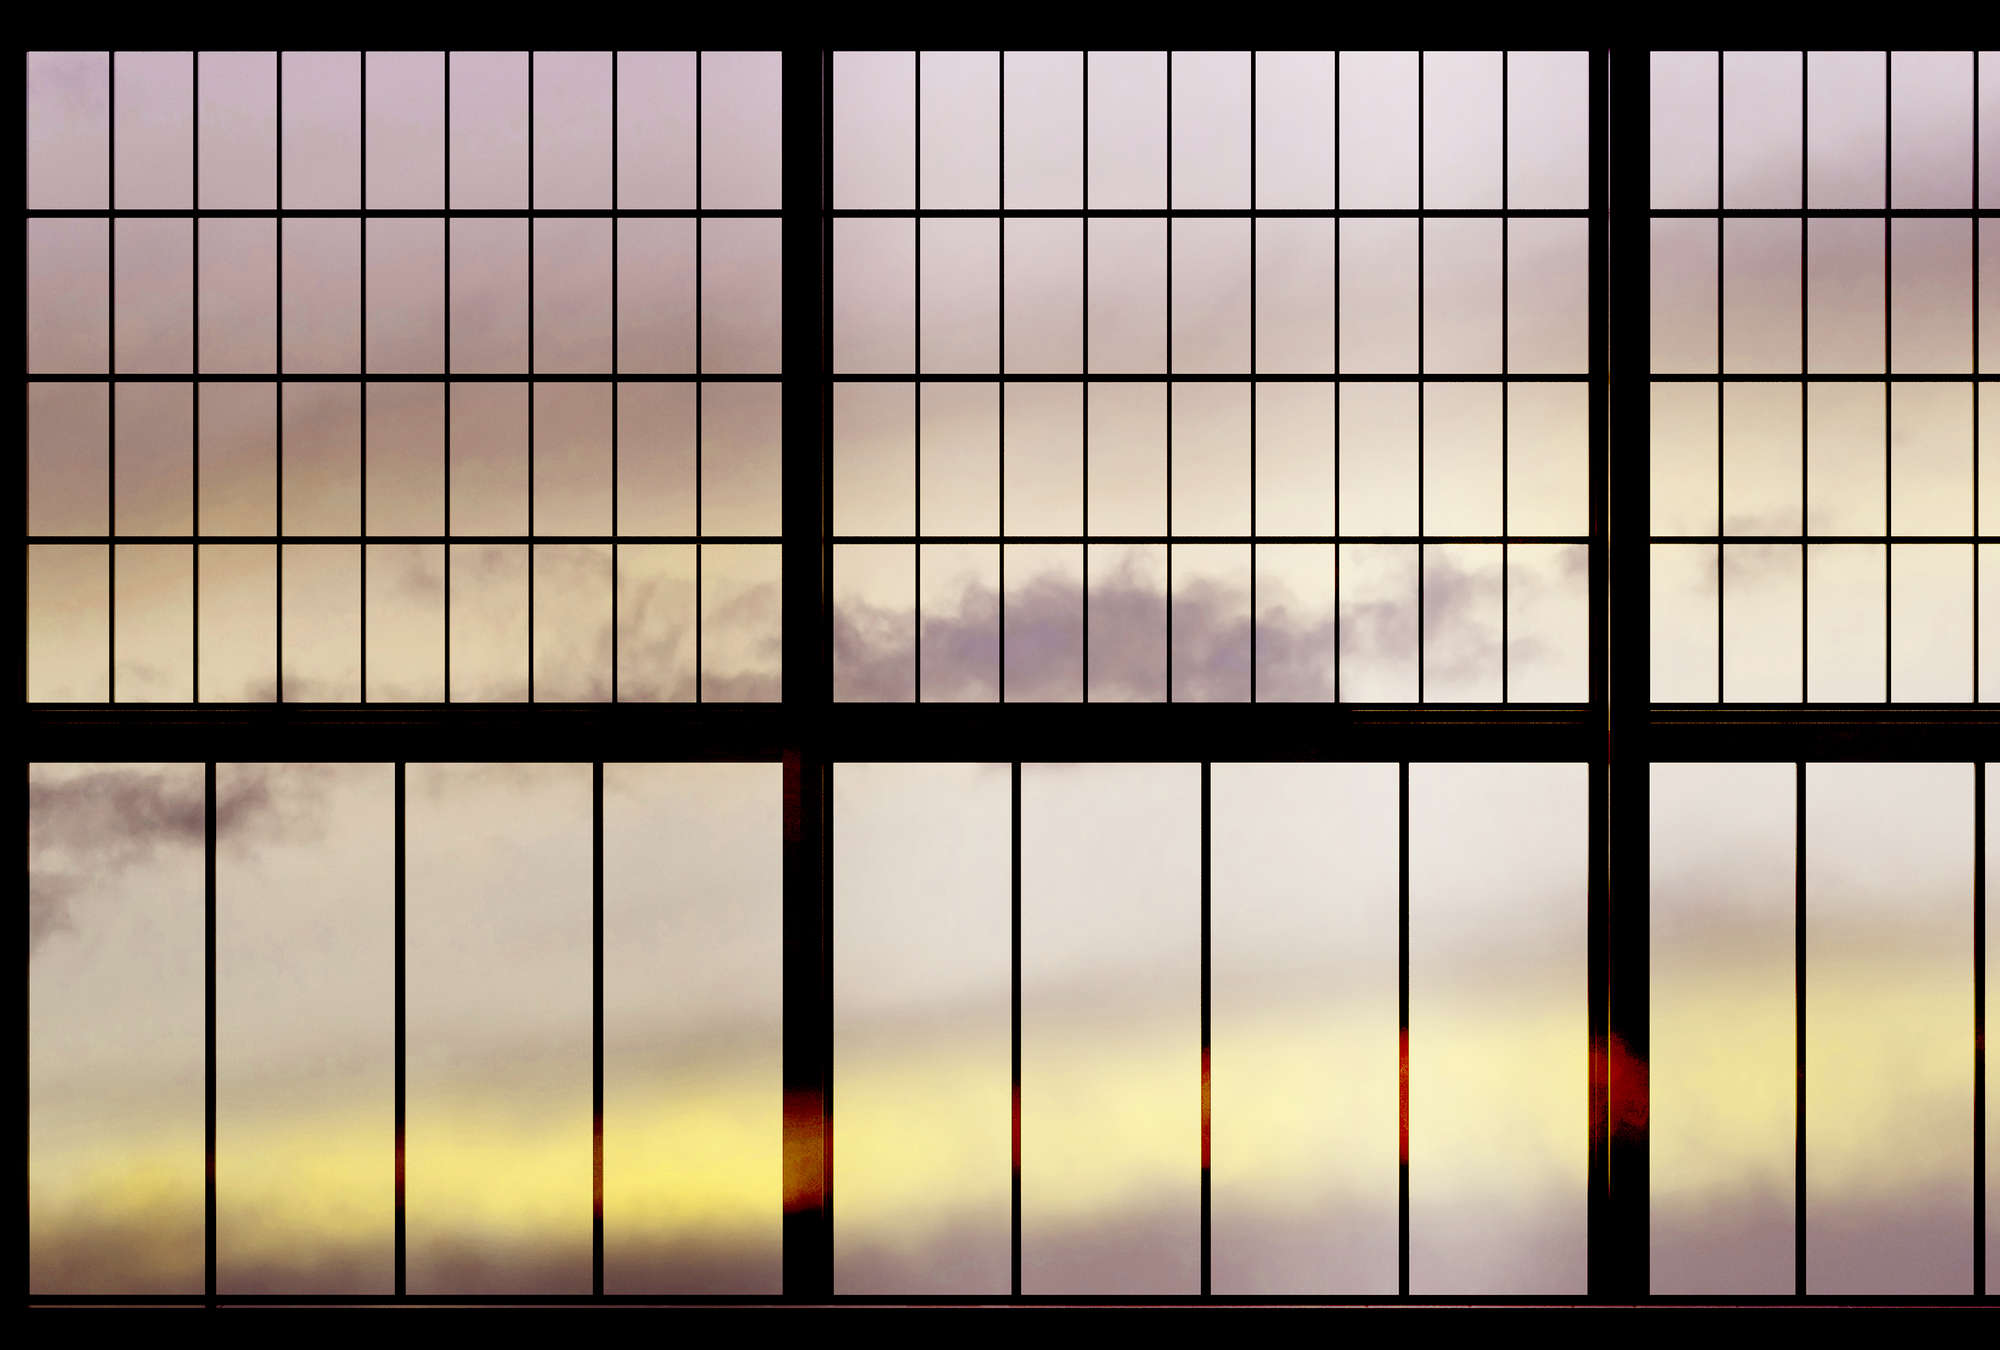             Sky 2 - Window Wallpaper Sunrise View - Yellow, Black | Matt Smooth Non-woven
        